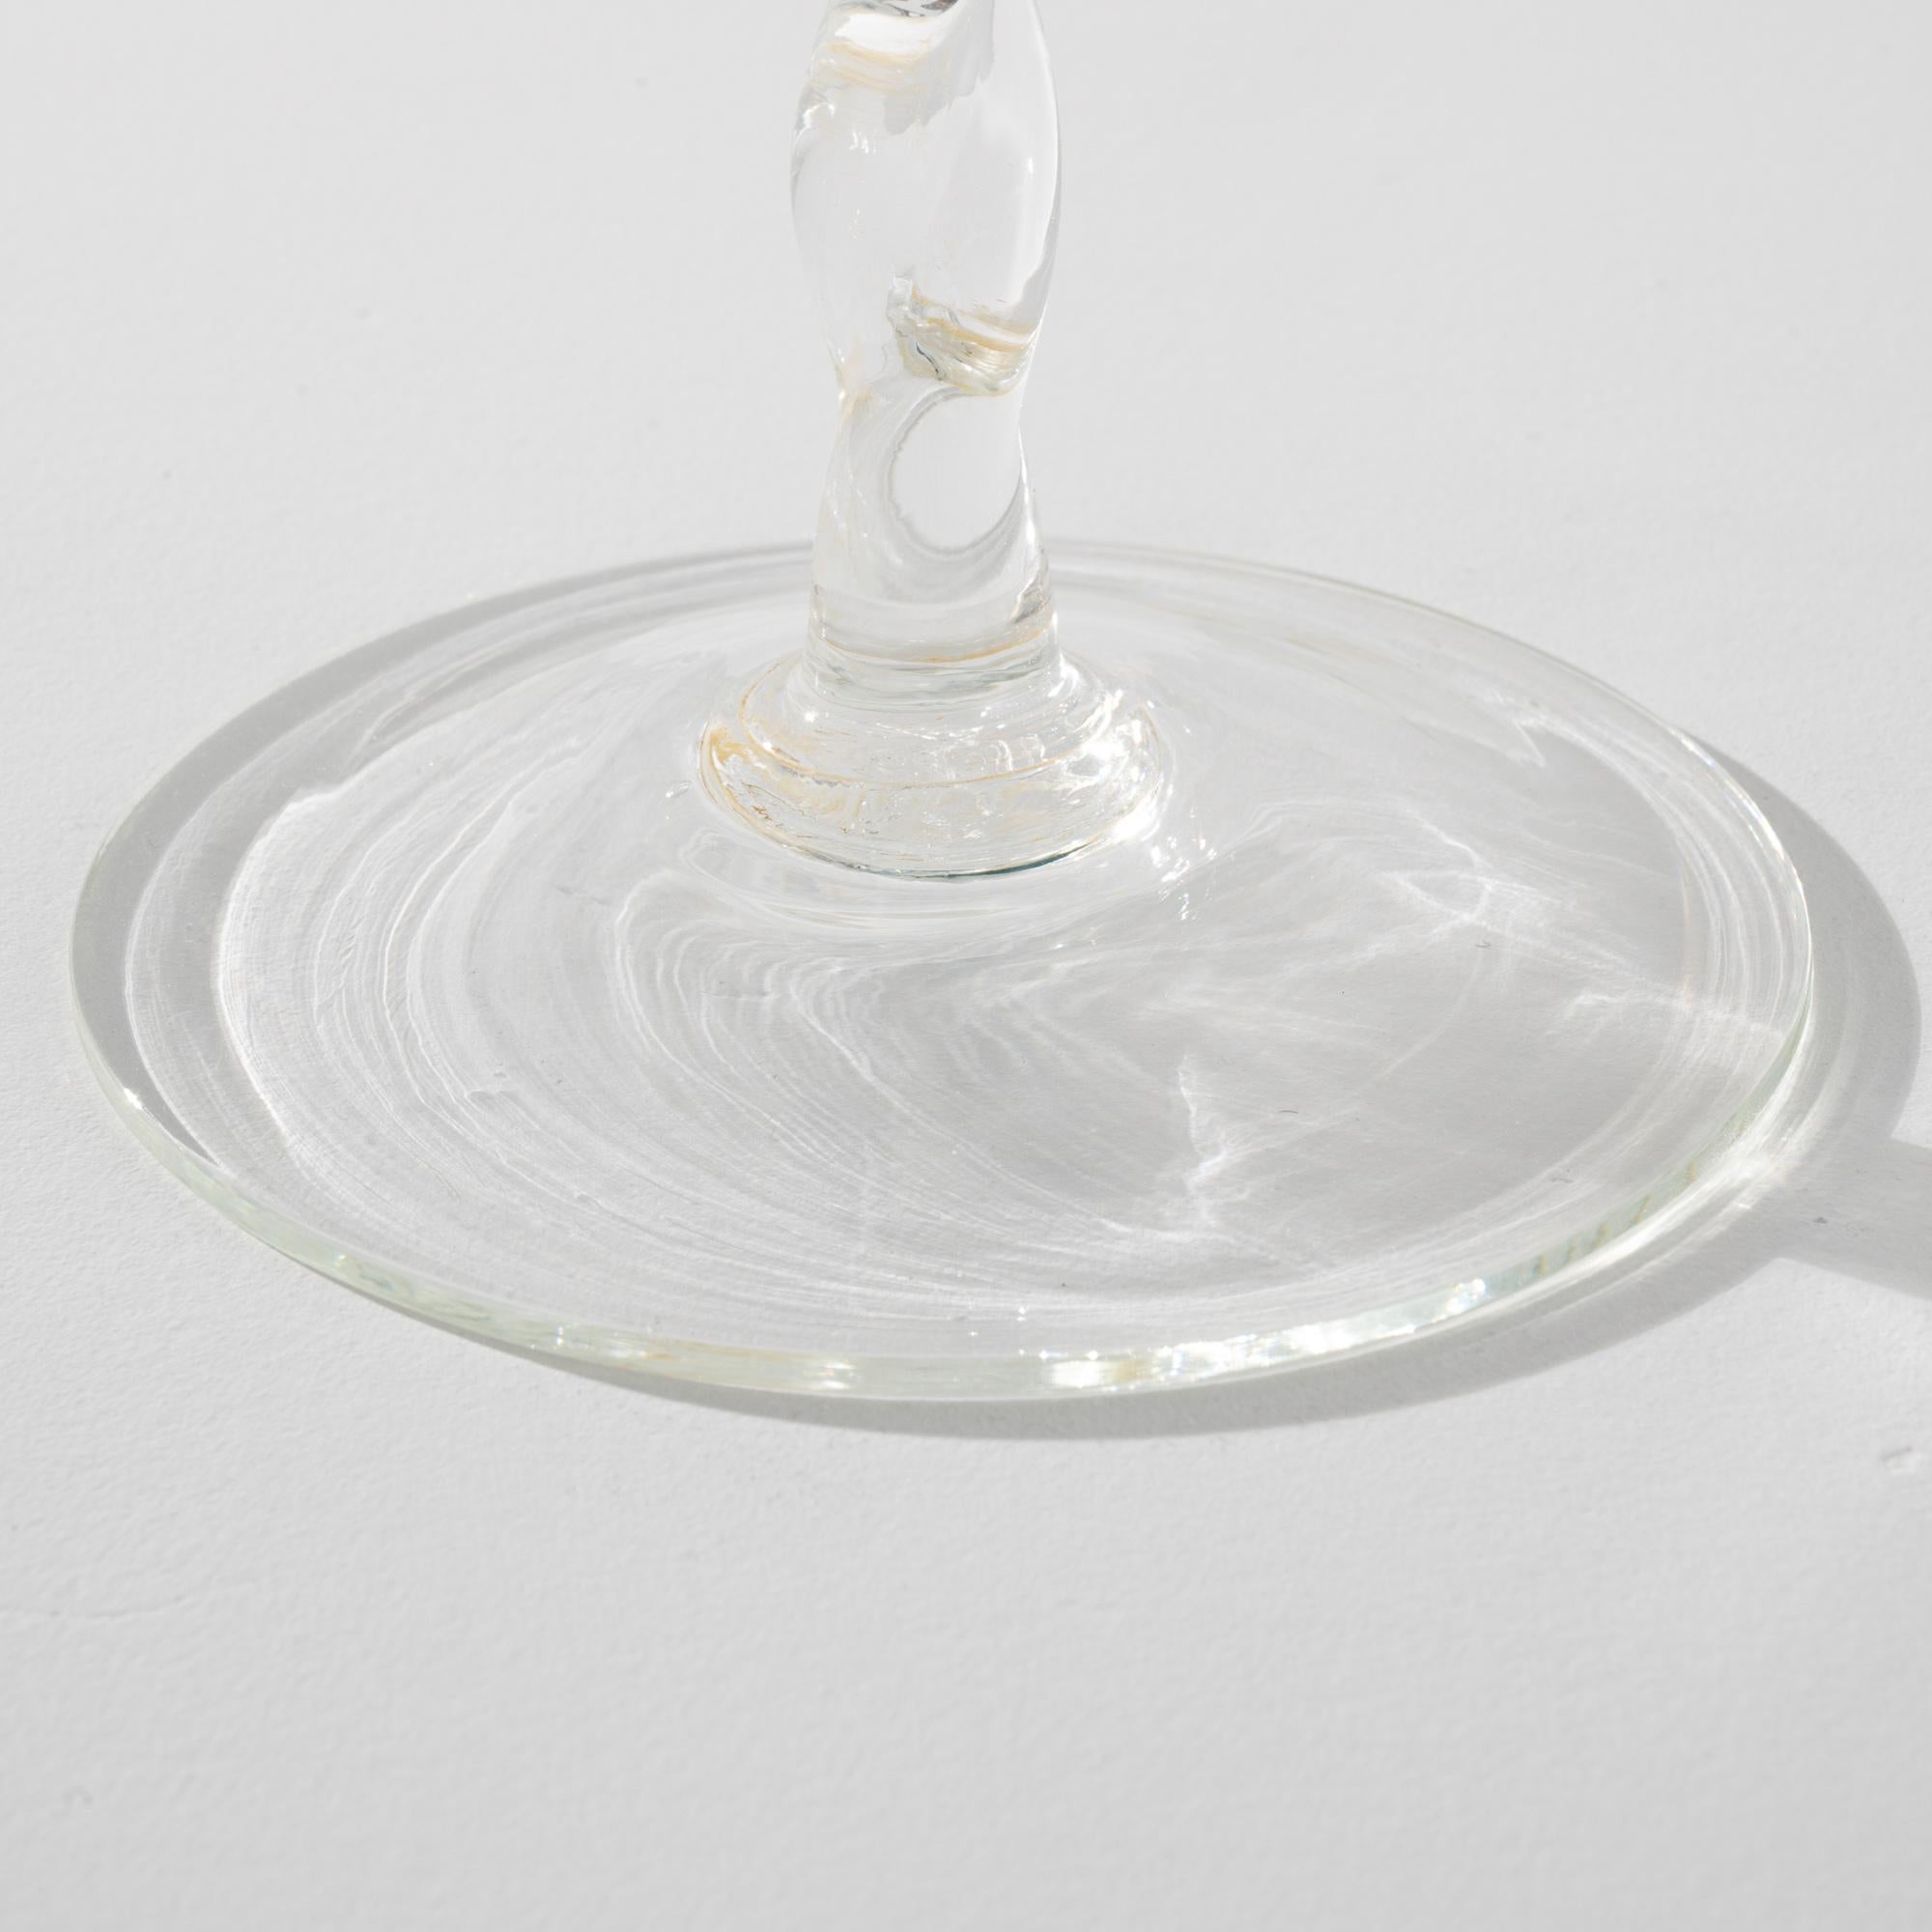 1960s Italian Teal Glass Goblet For Sale 4